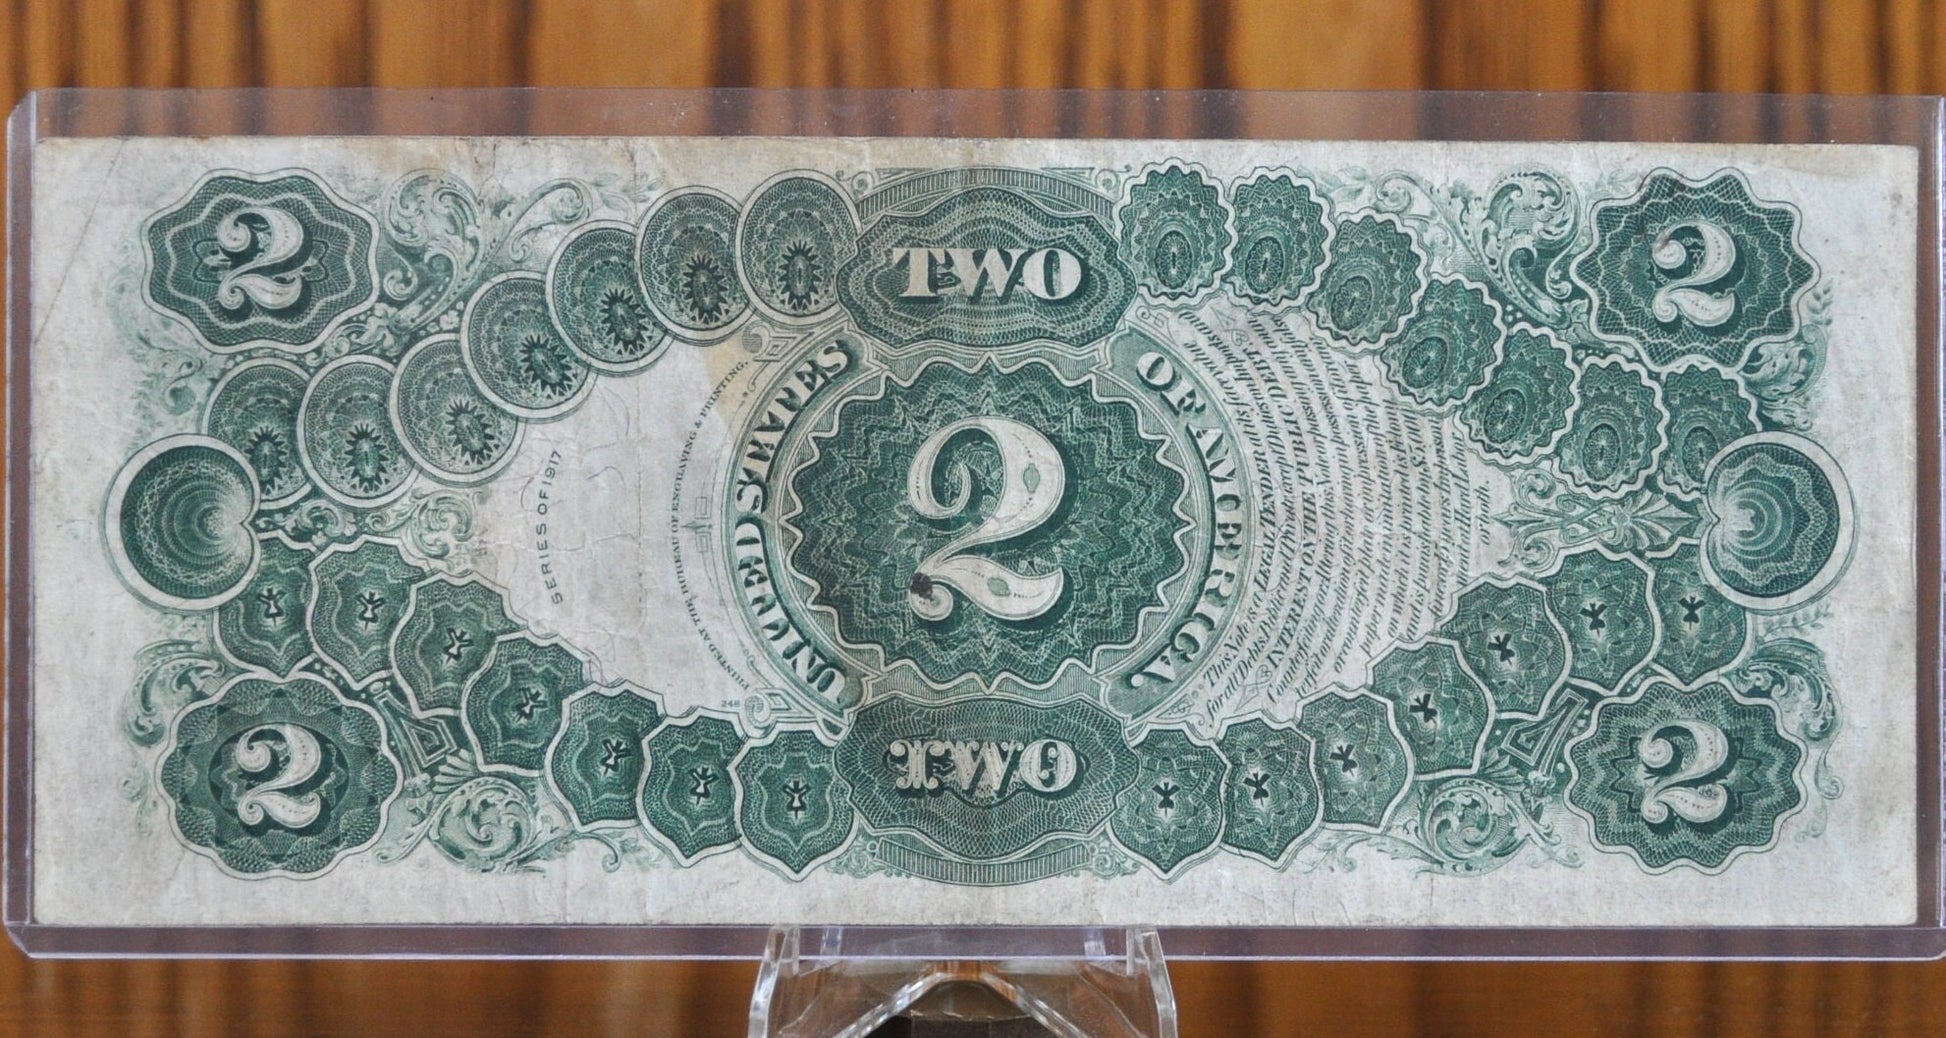 1917 2 Dollar Bill - XF Grade / Condition - Rarer Note - 1917 Horse Blanket Note Two Dollar Bill Bracelet back Fr#60 Fr60